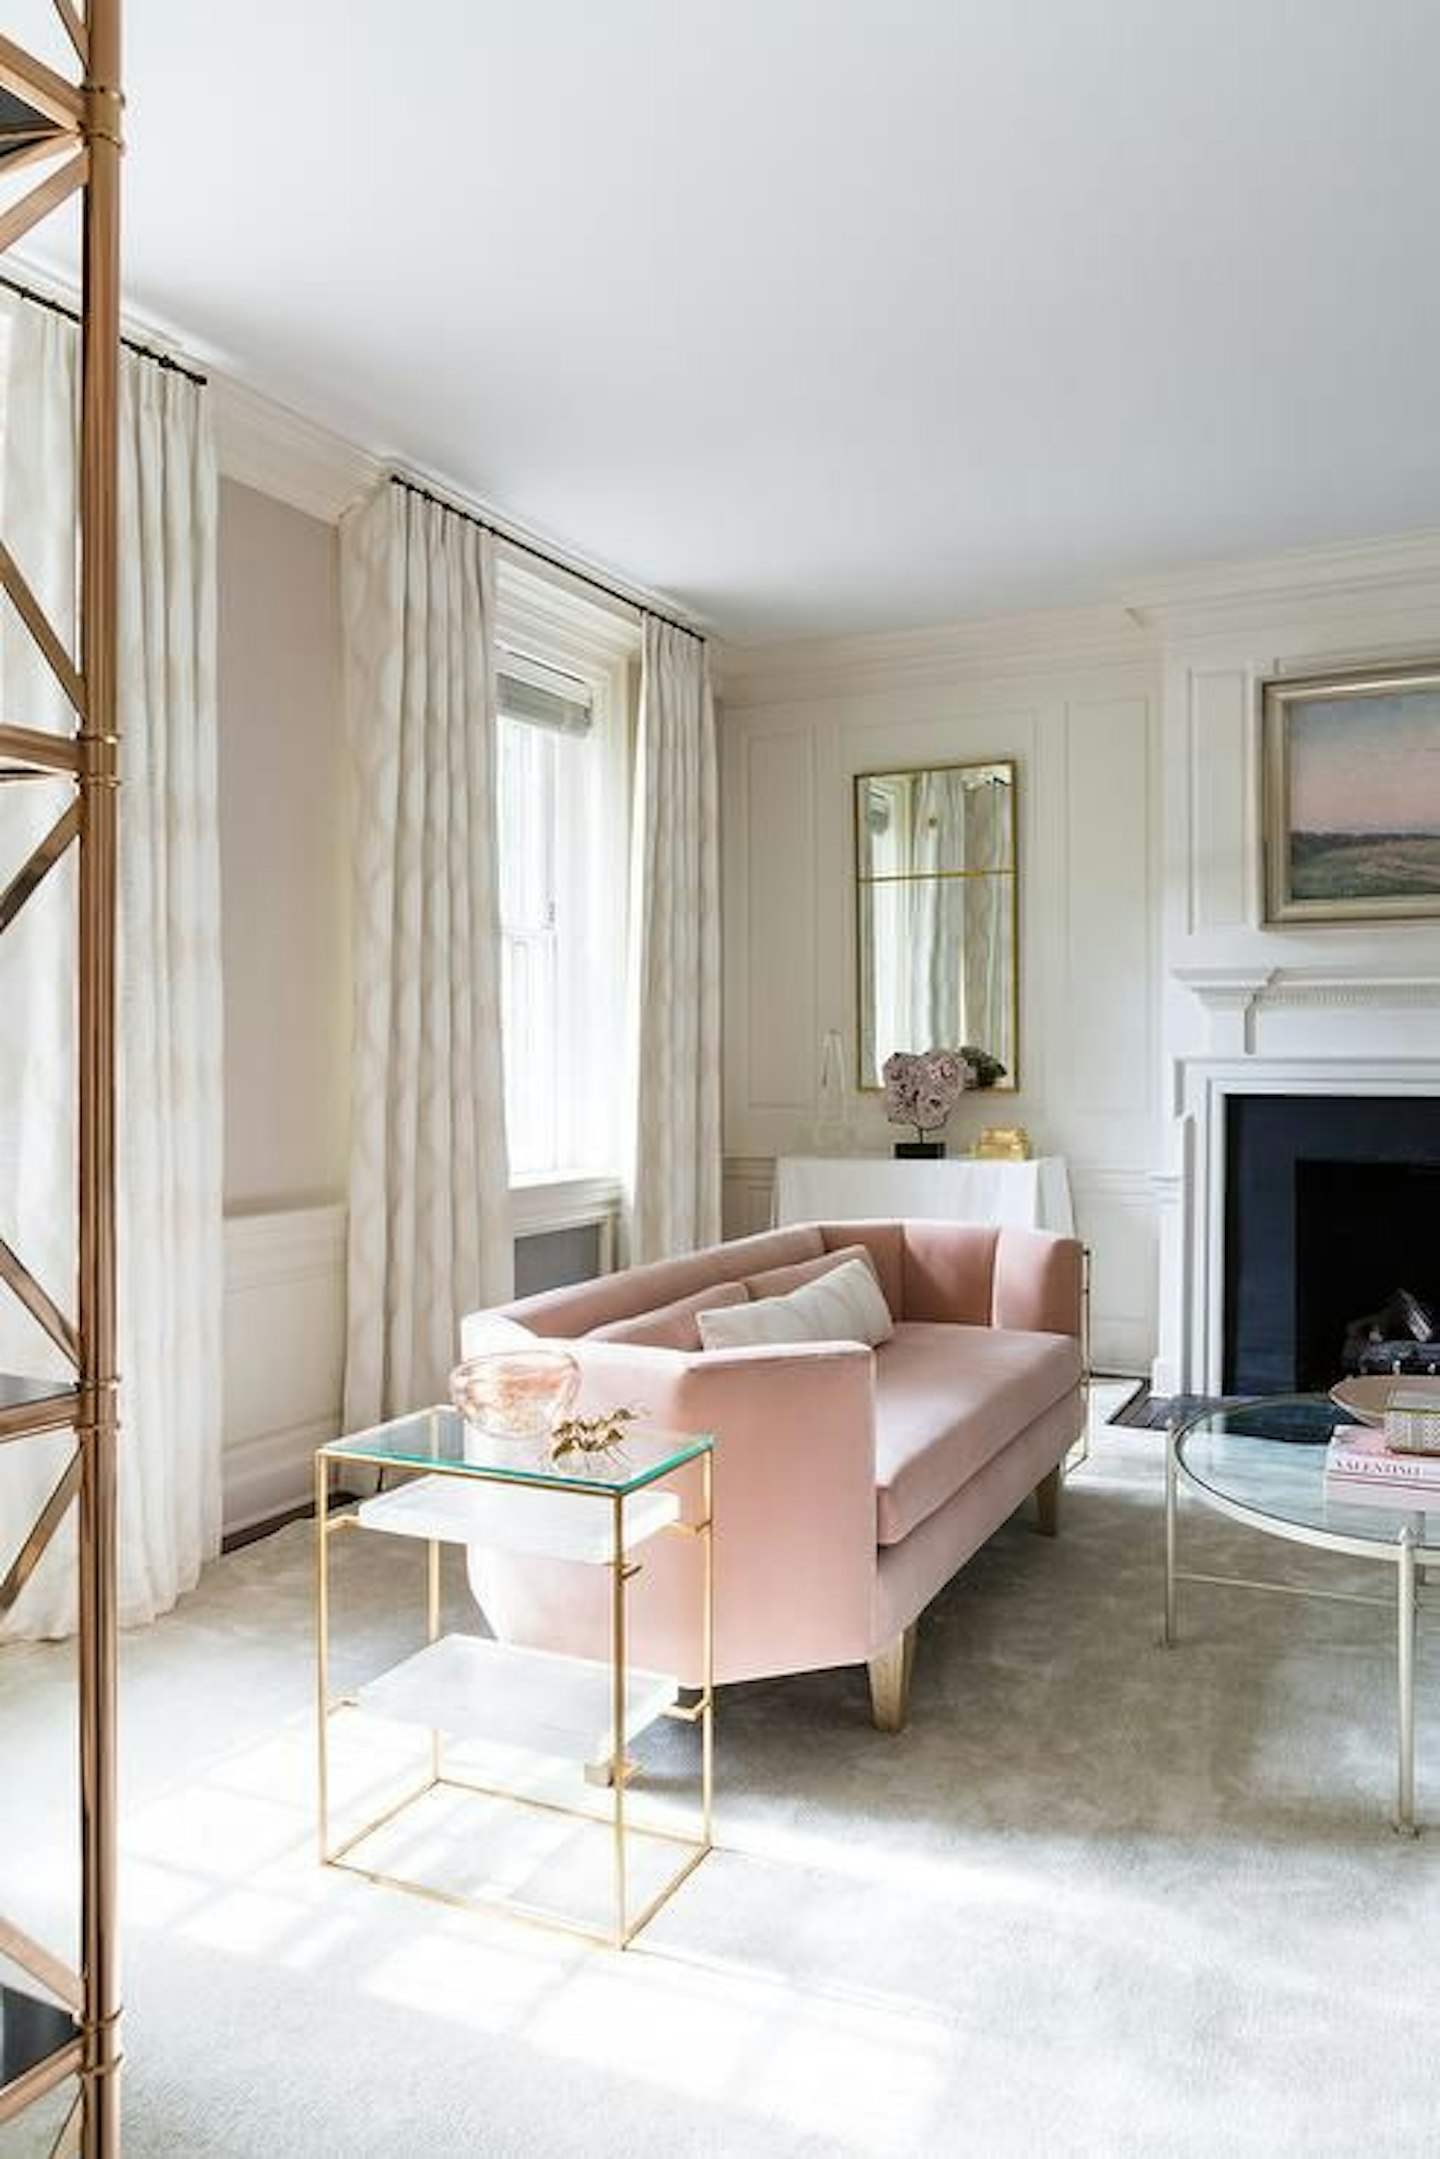 pastel living room interiors inspiration